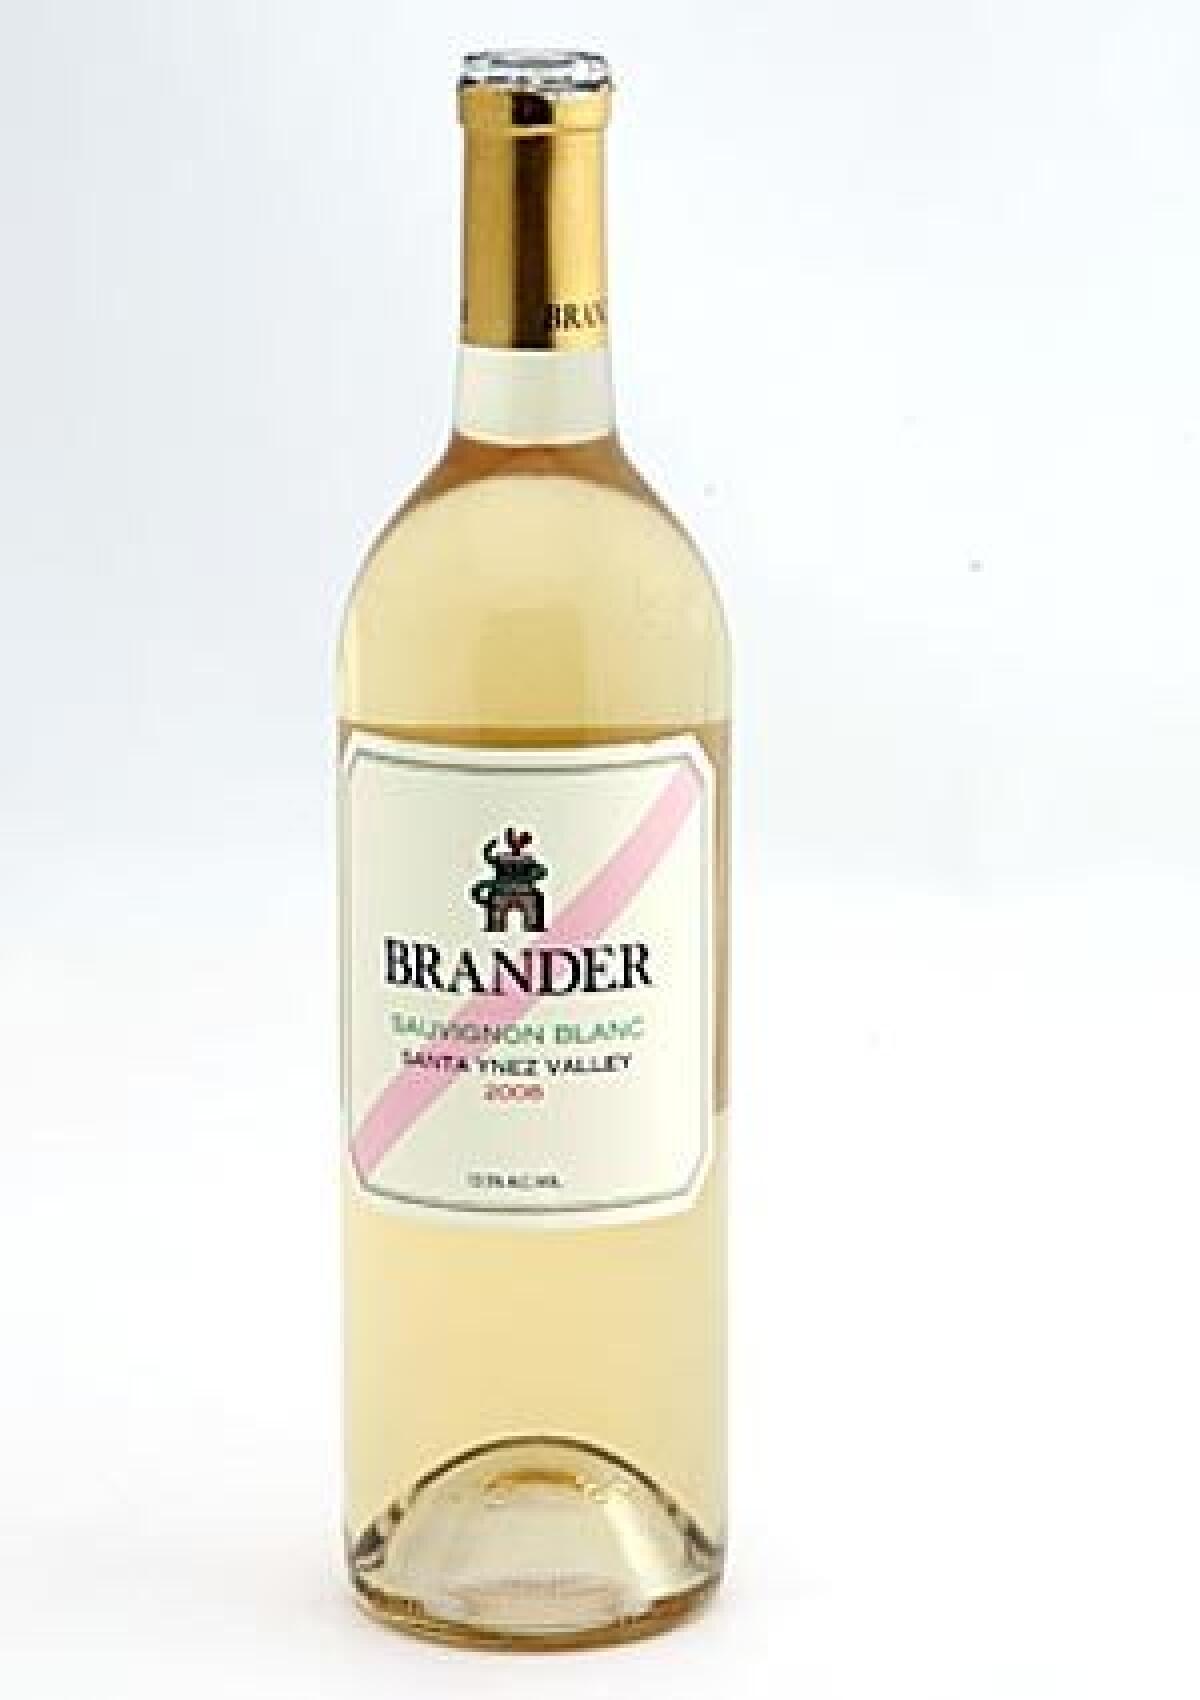 WINE OF THE WEEK: 2008 Brander Sauvignon Blanc